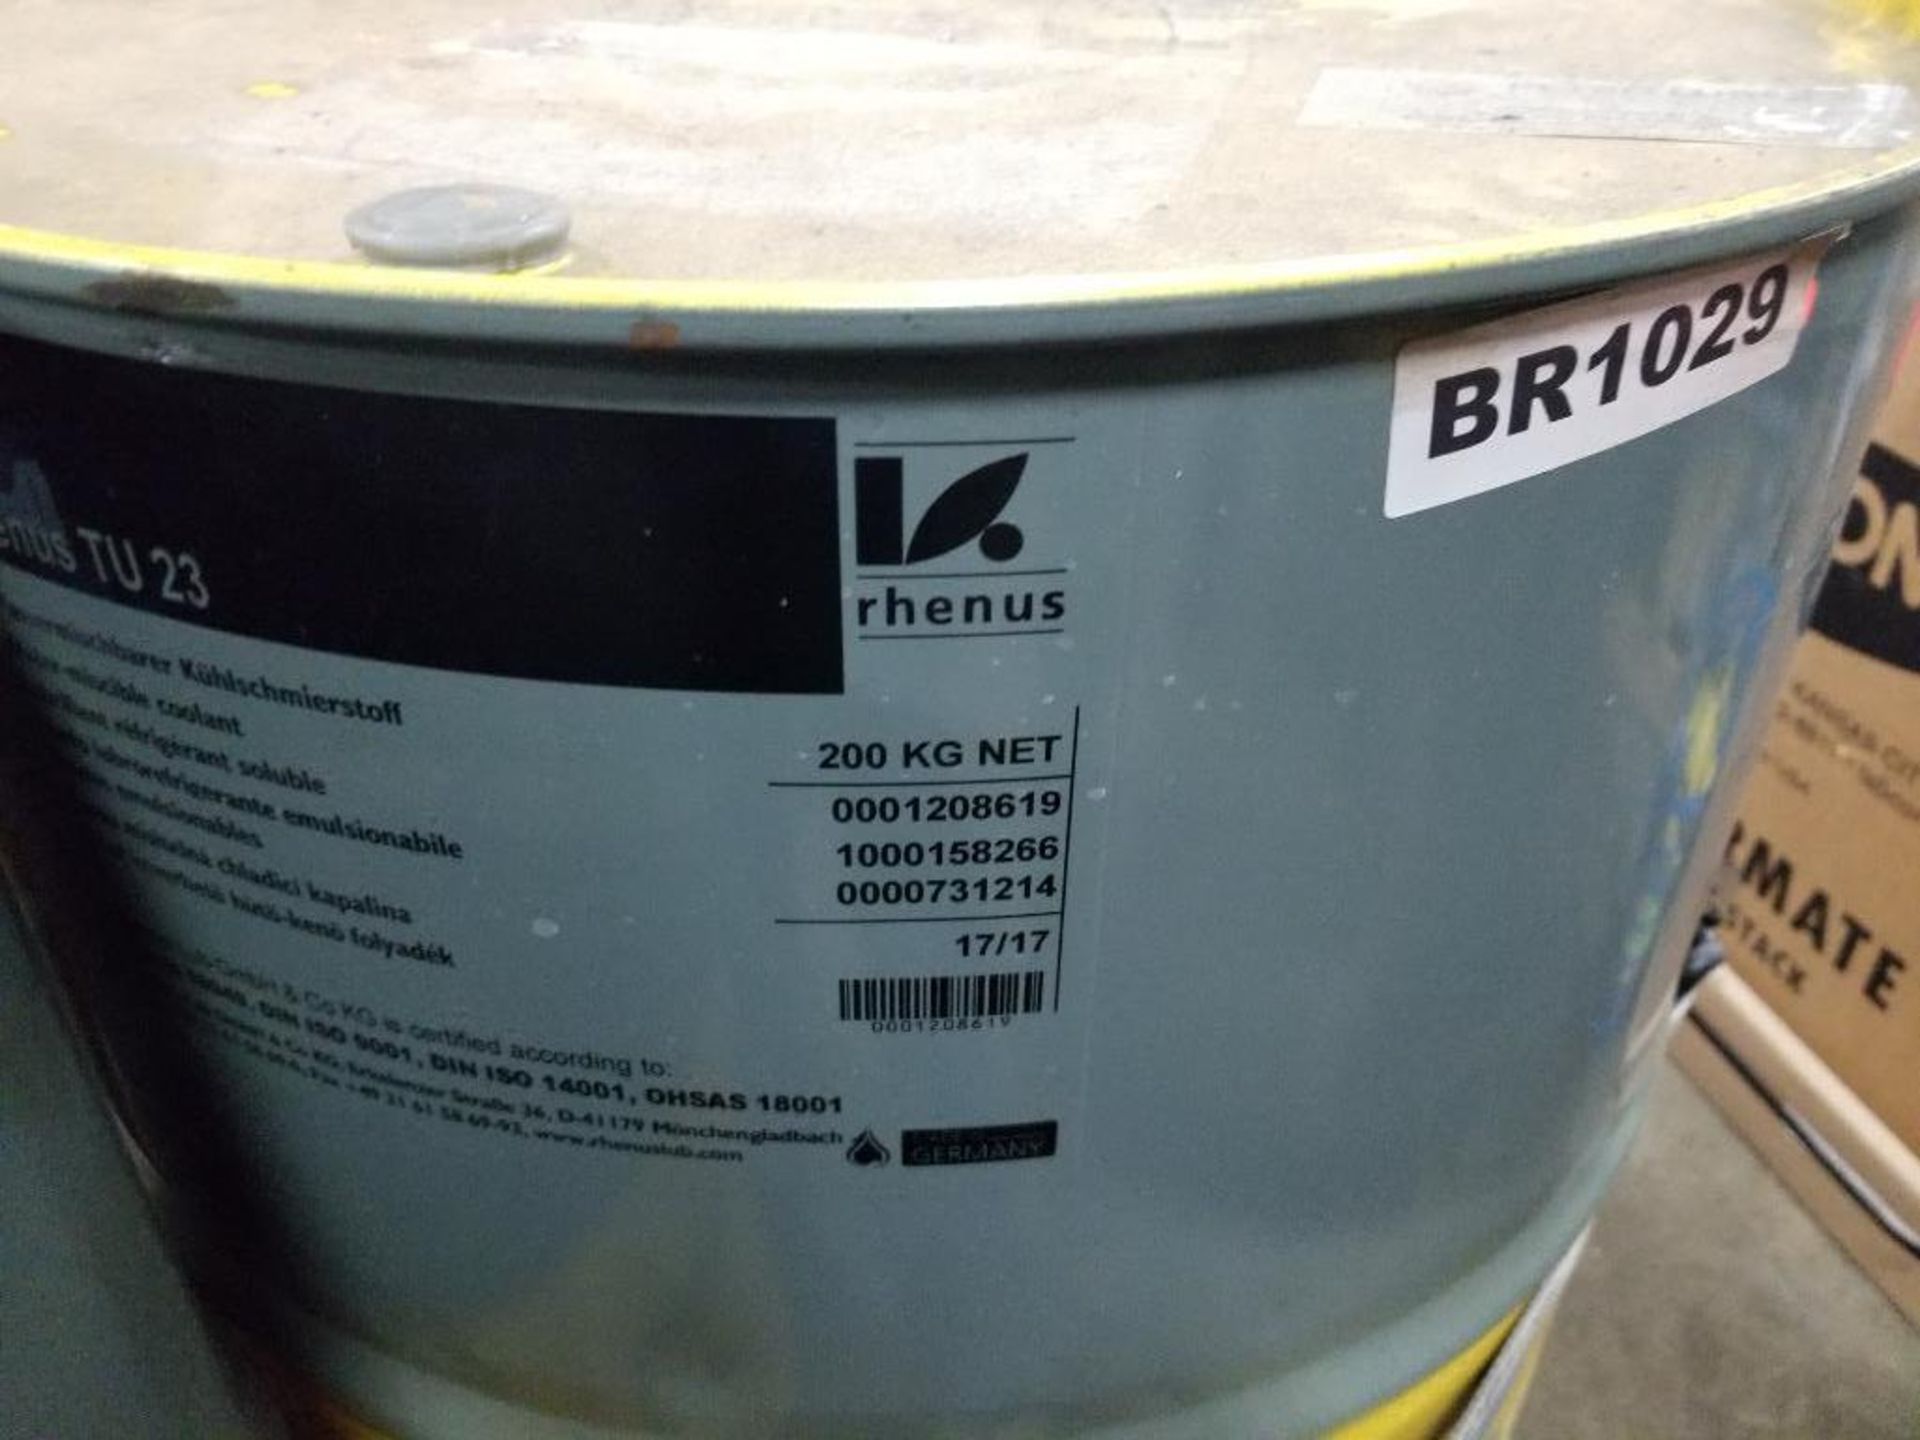 55 gallon barrel of Rhenus TU 23 metalworking coolant. New sealed container. - Image 3 of 4